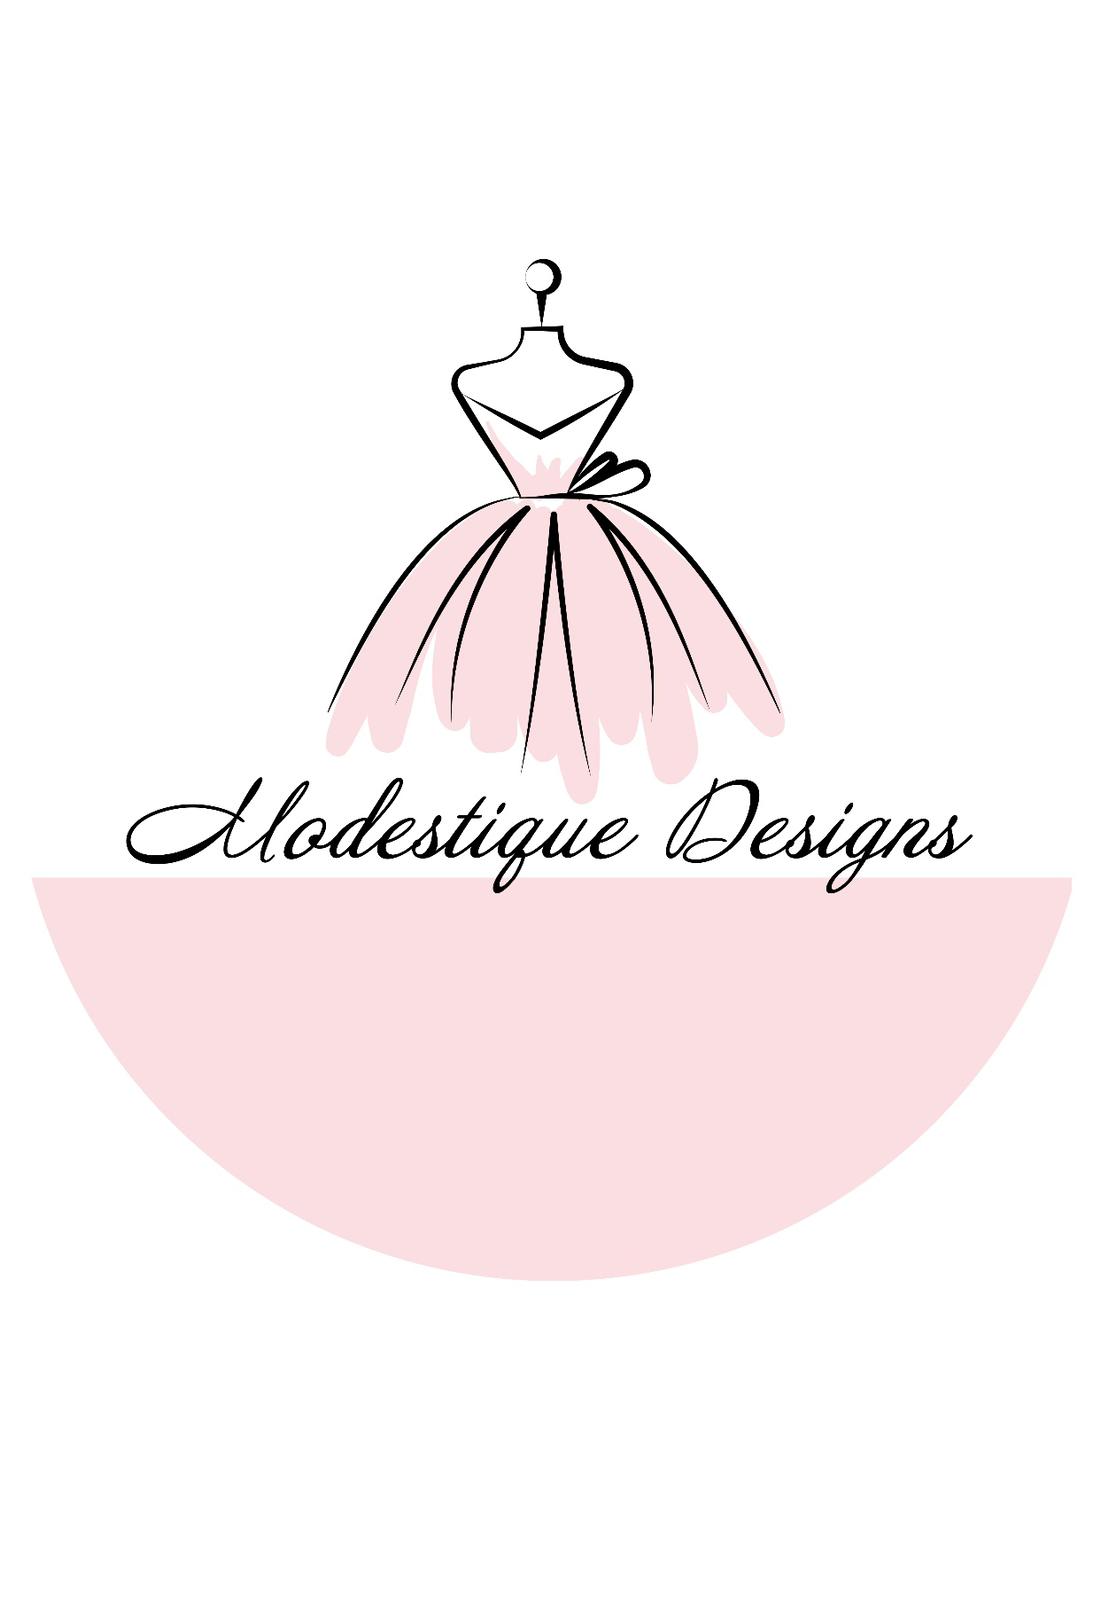 Modestique Designs 